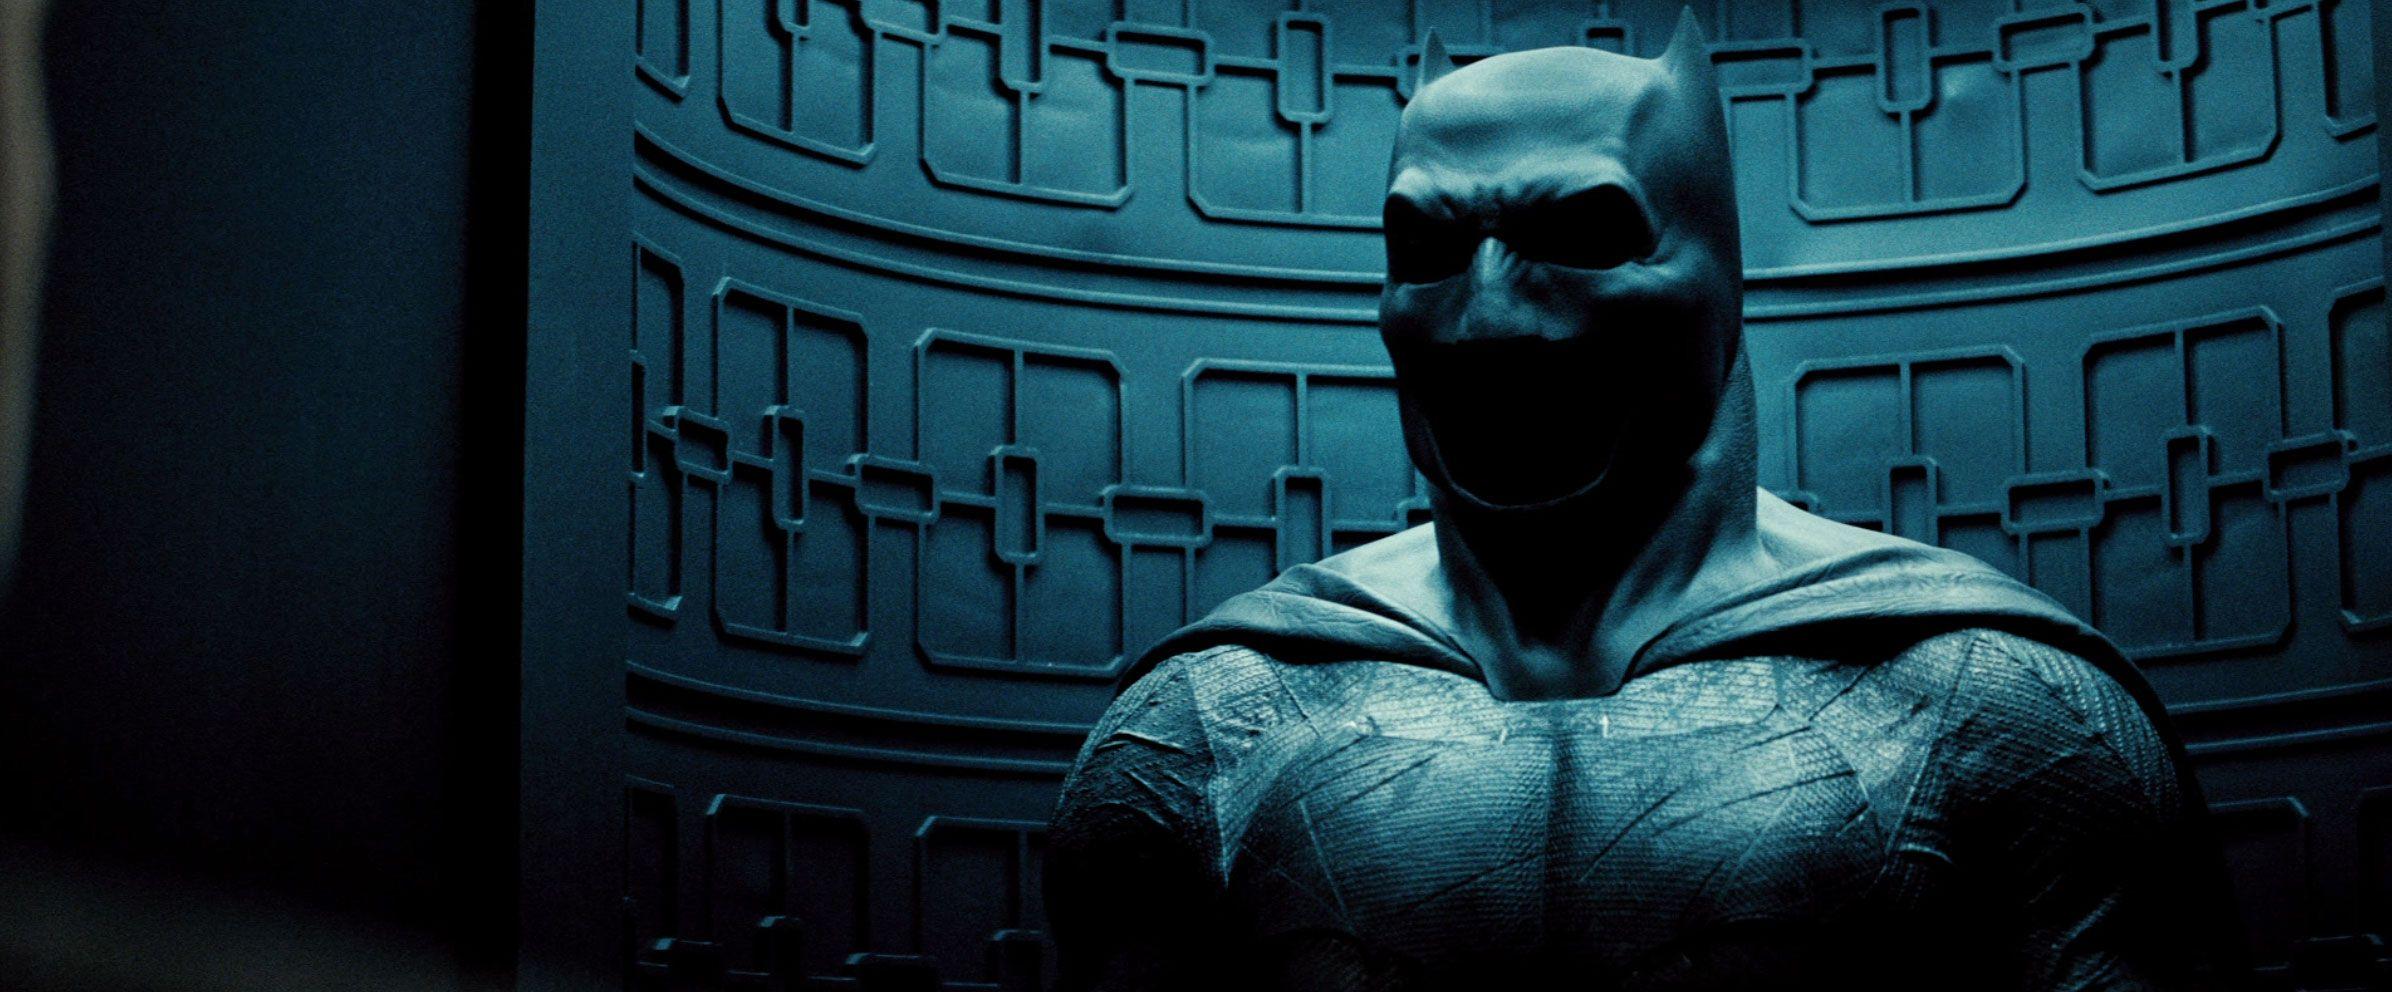 Ben Affleck to Direct The Batman Solo Movie